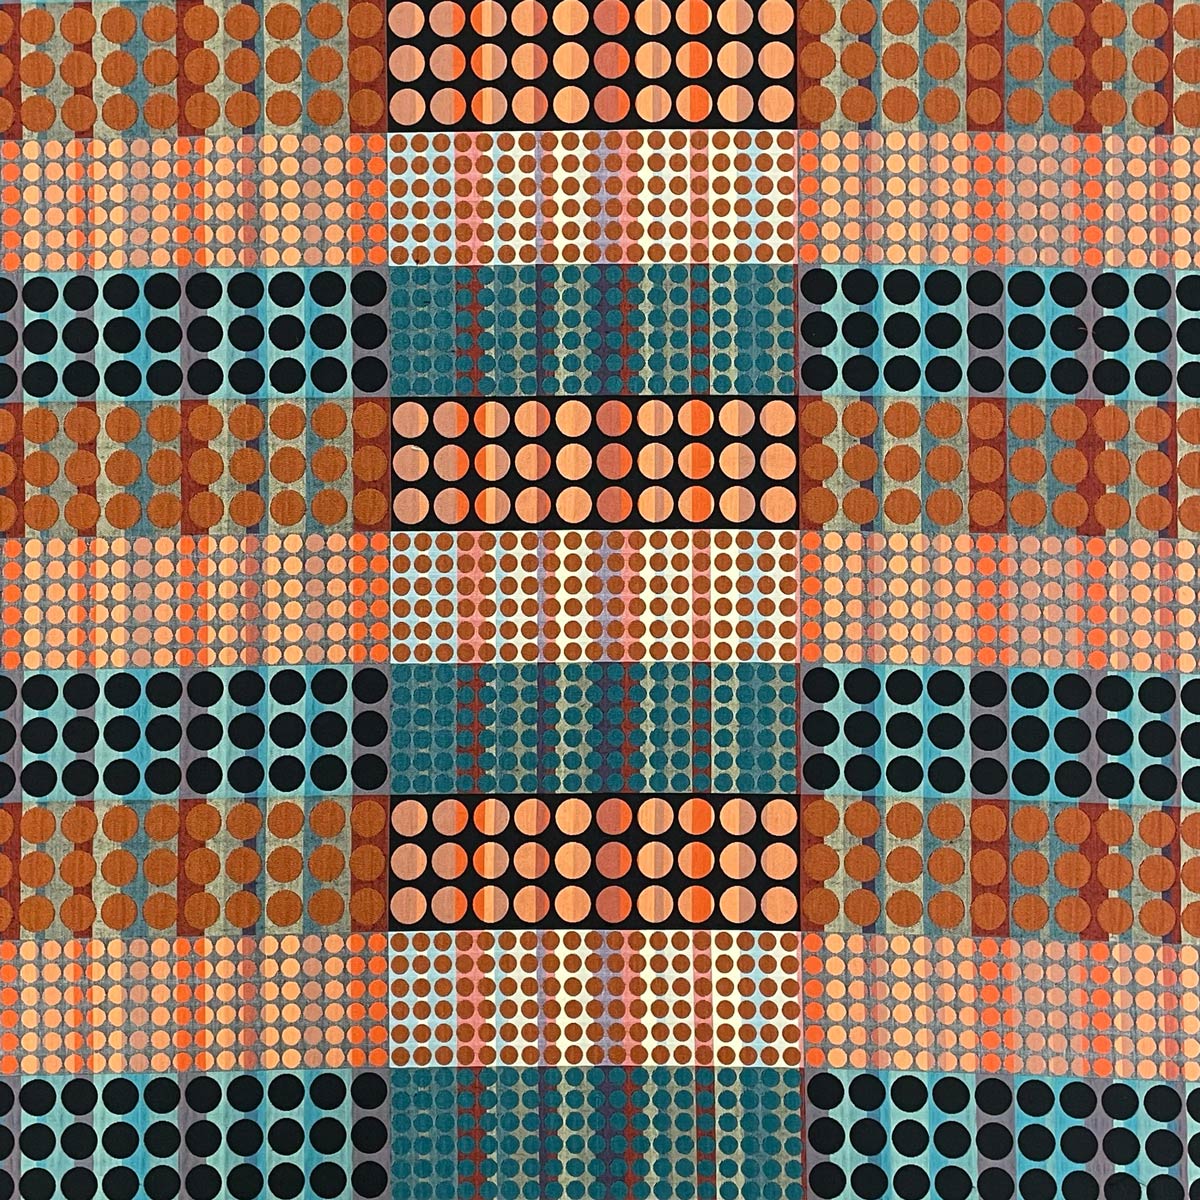 Interior accessories, interior decoration, British weaving, Margo Selby fabric, patterned fabric, colourful fabric, designer fabric, orange fabric, blue fabric